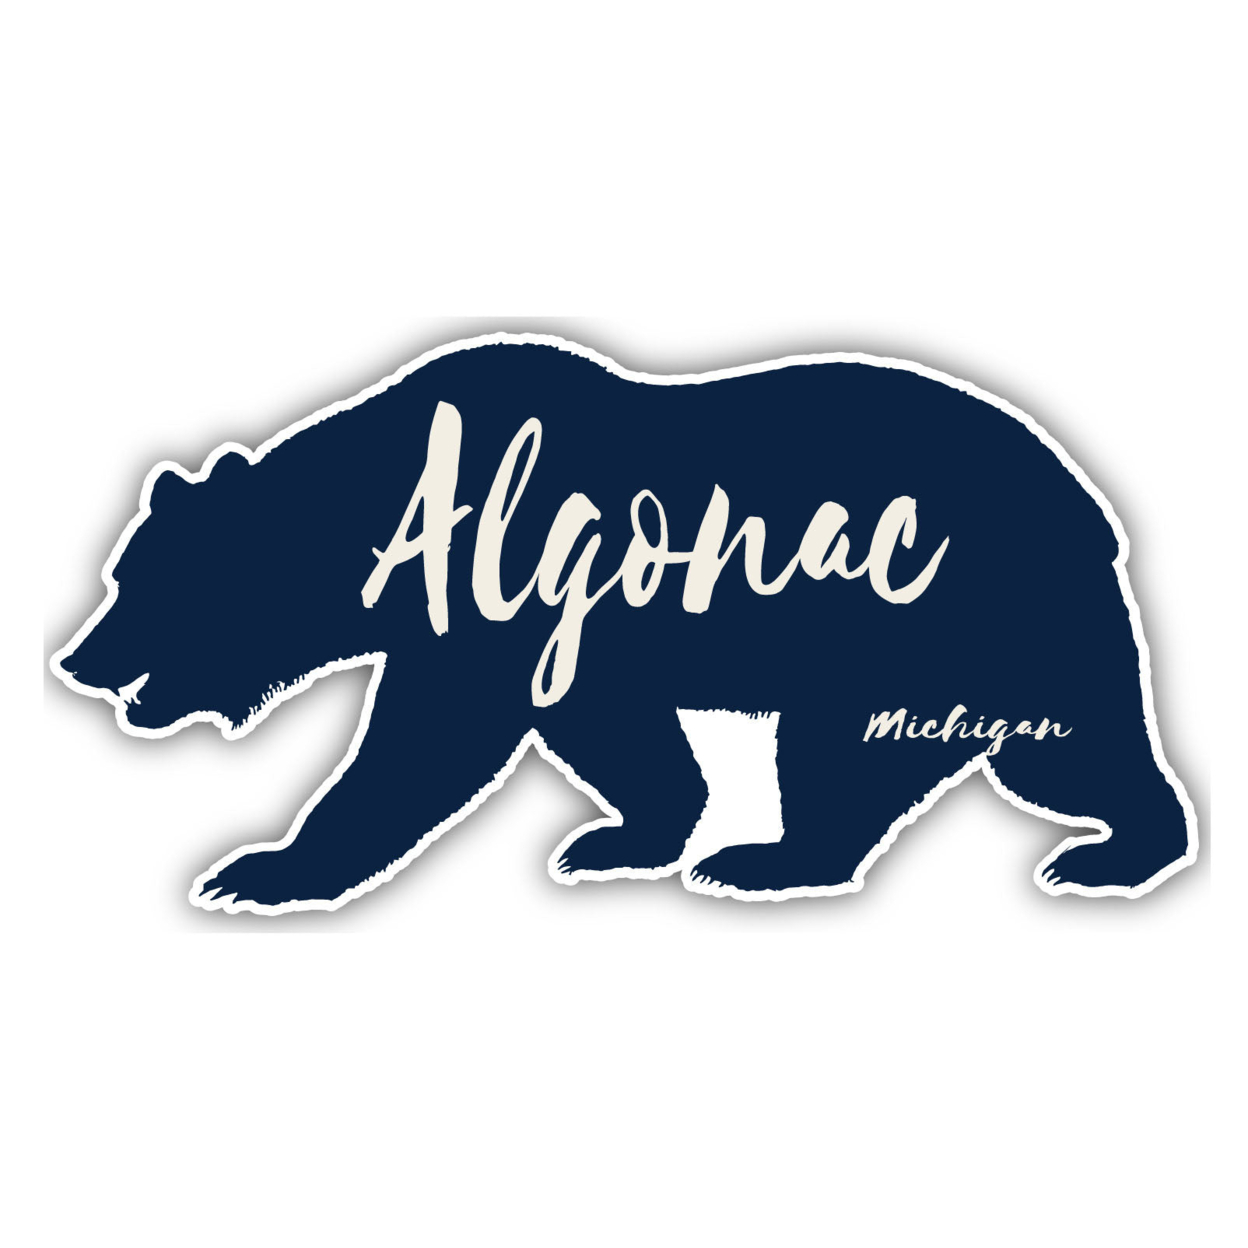 Algonac Michigan Souvenir Decorative Stickers (Choose Theme And Size) - 4-Pack, 6-Inch, Bear